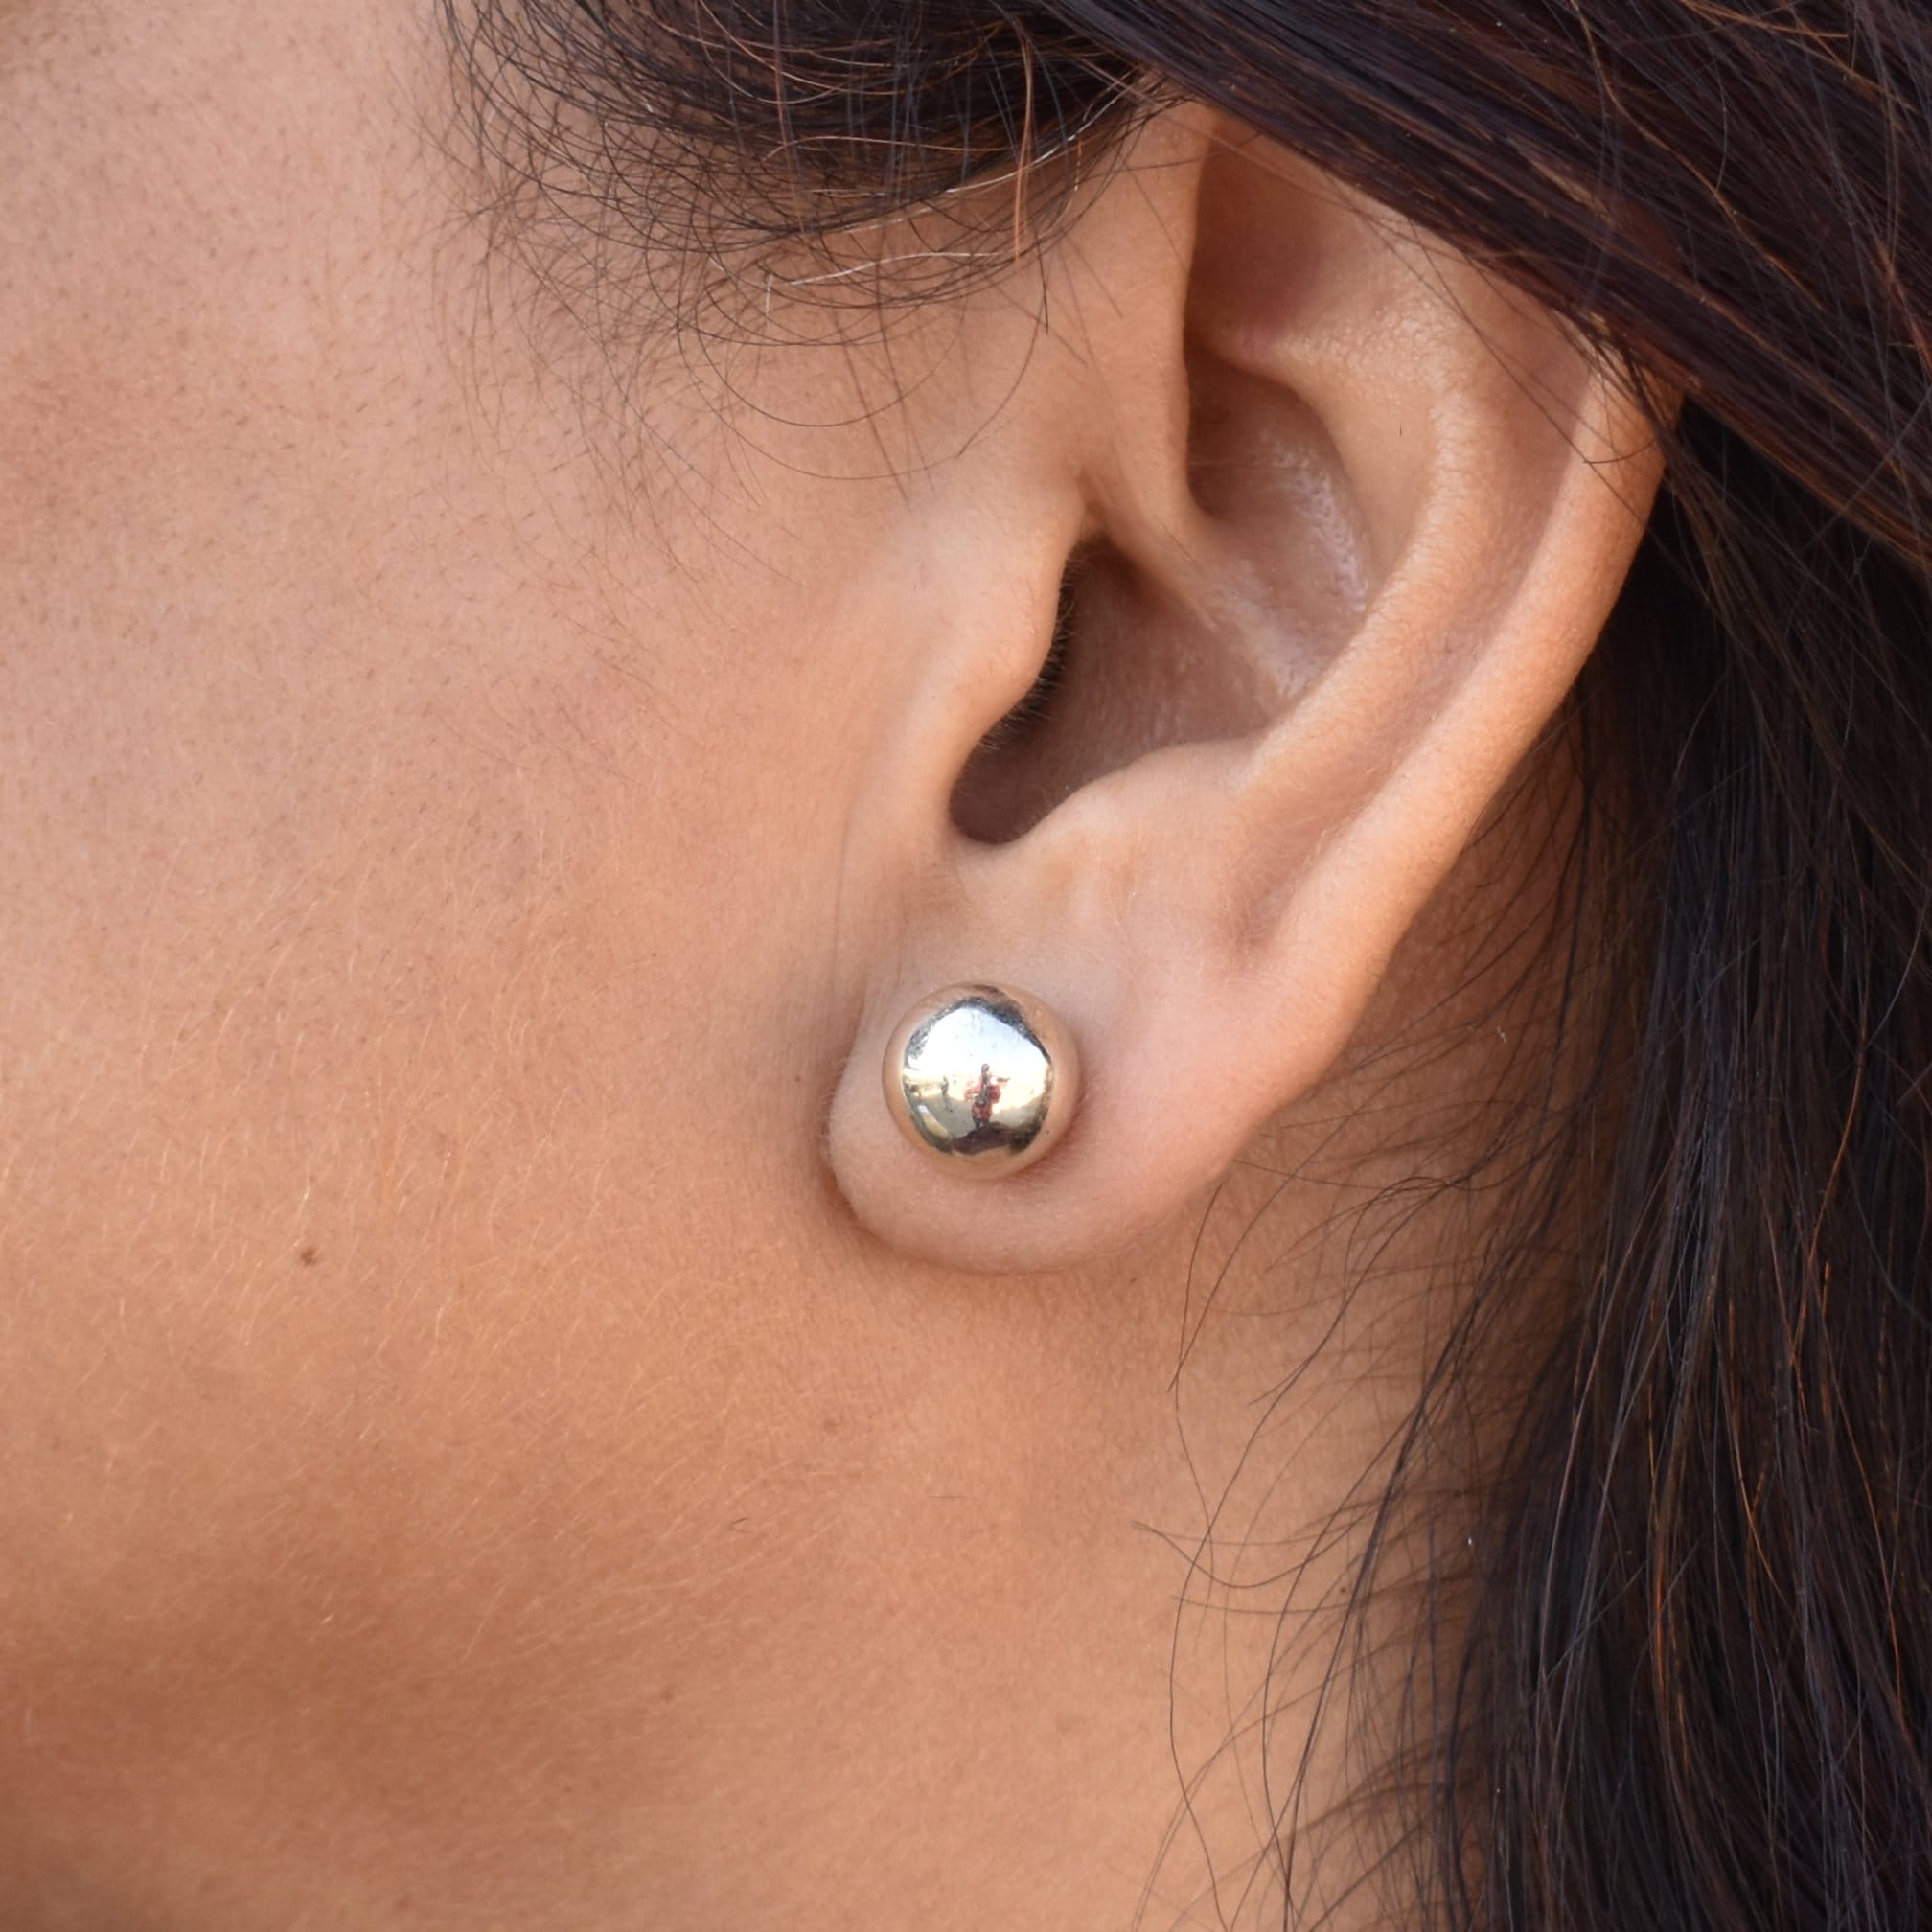 Giani Bernini Ball Stud Earrings 10mm in Sterling Silver Created for  Macys  Macys